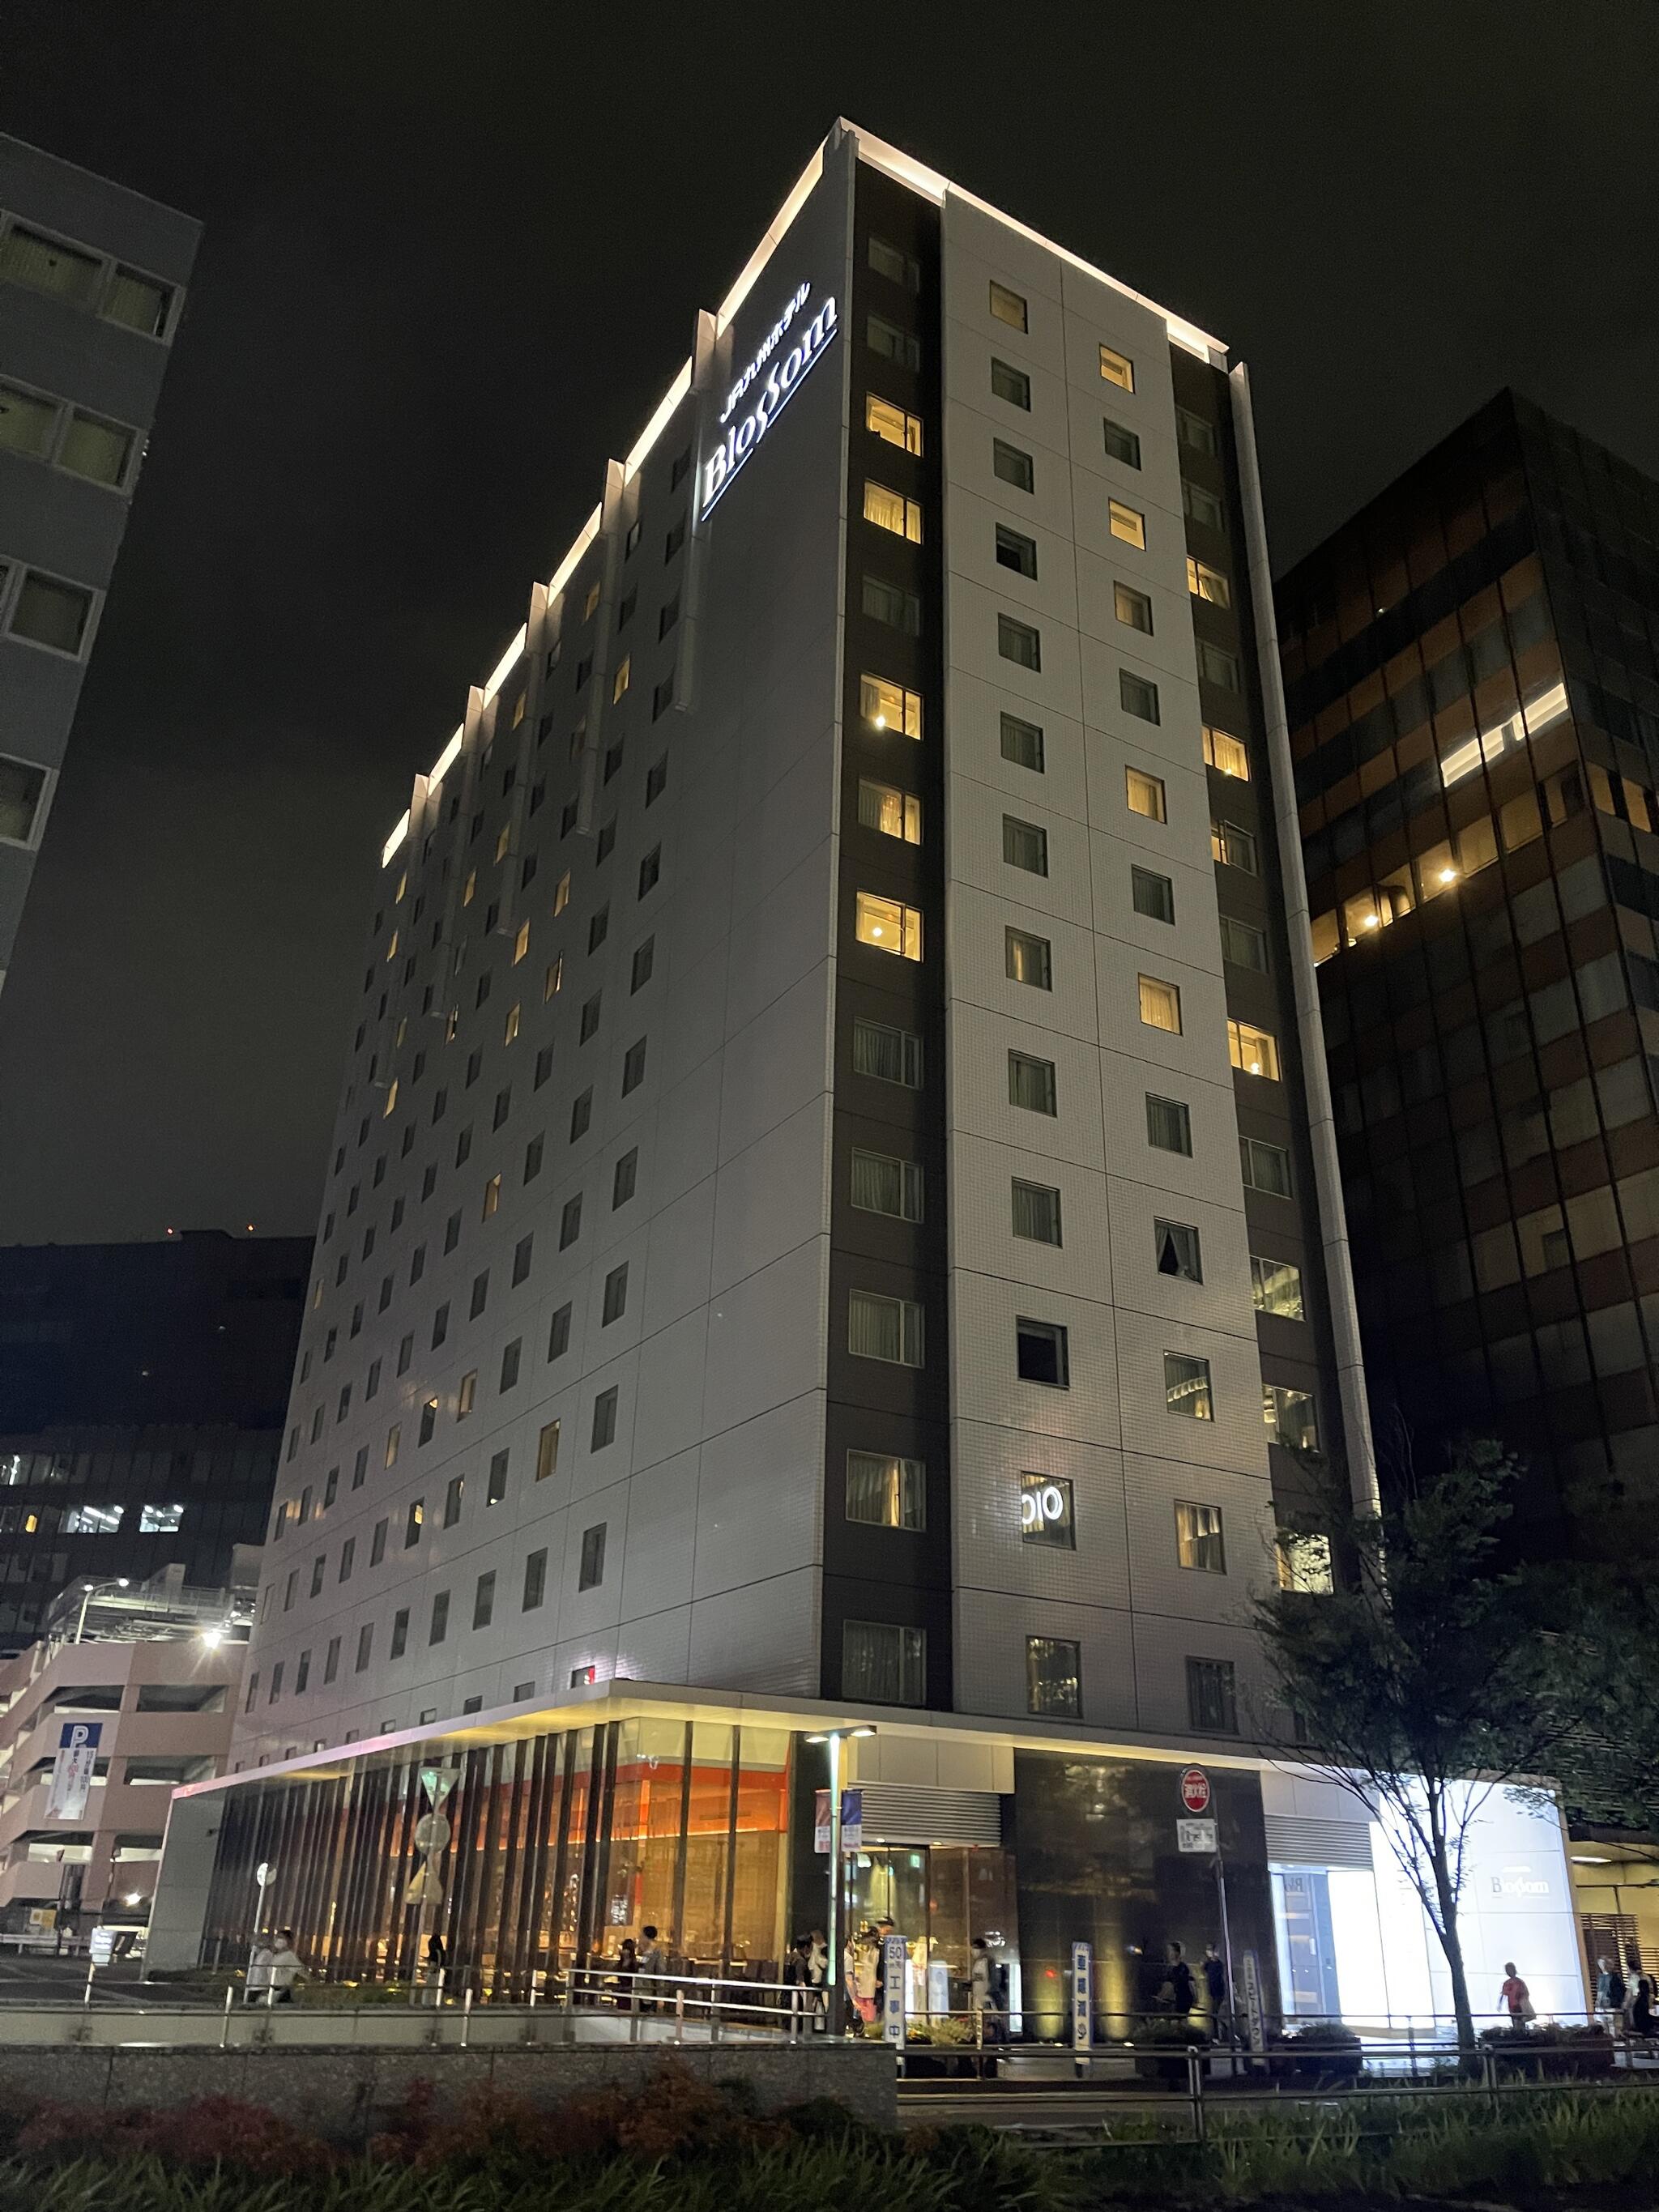 JR九州ホテル ブラッサム博多中央の代表写真1